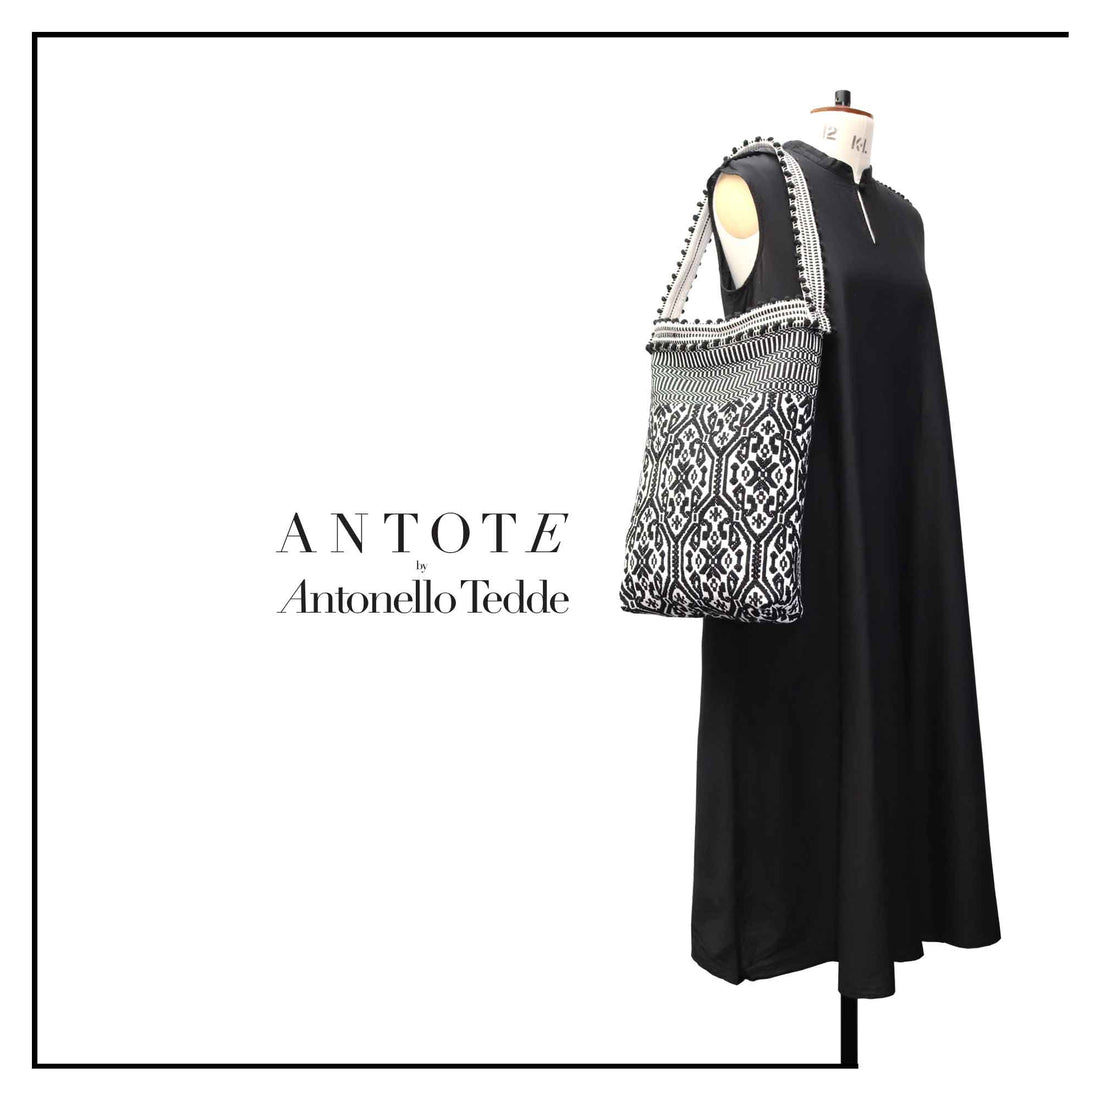 ANTOTE by Antonello Tedde ganzos jacquard fabrics